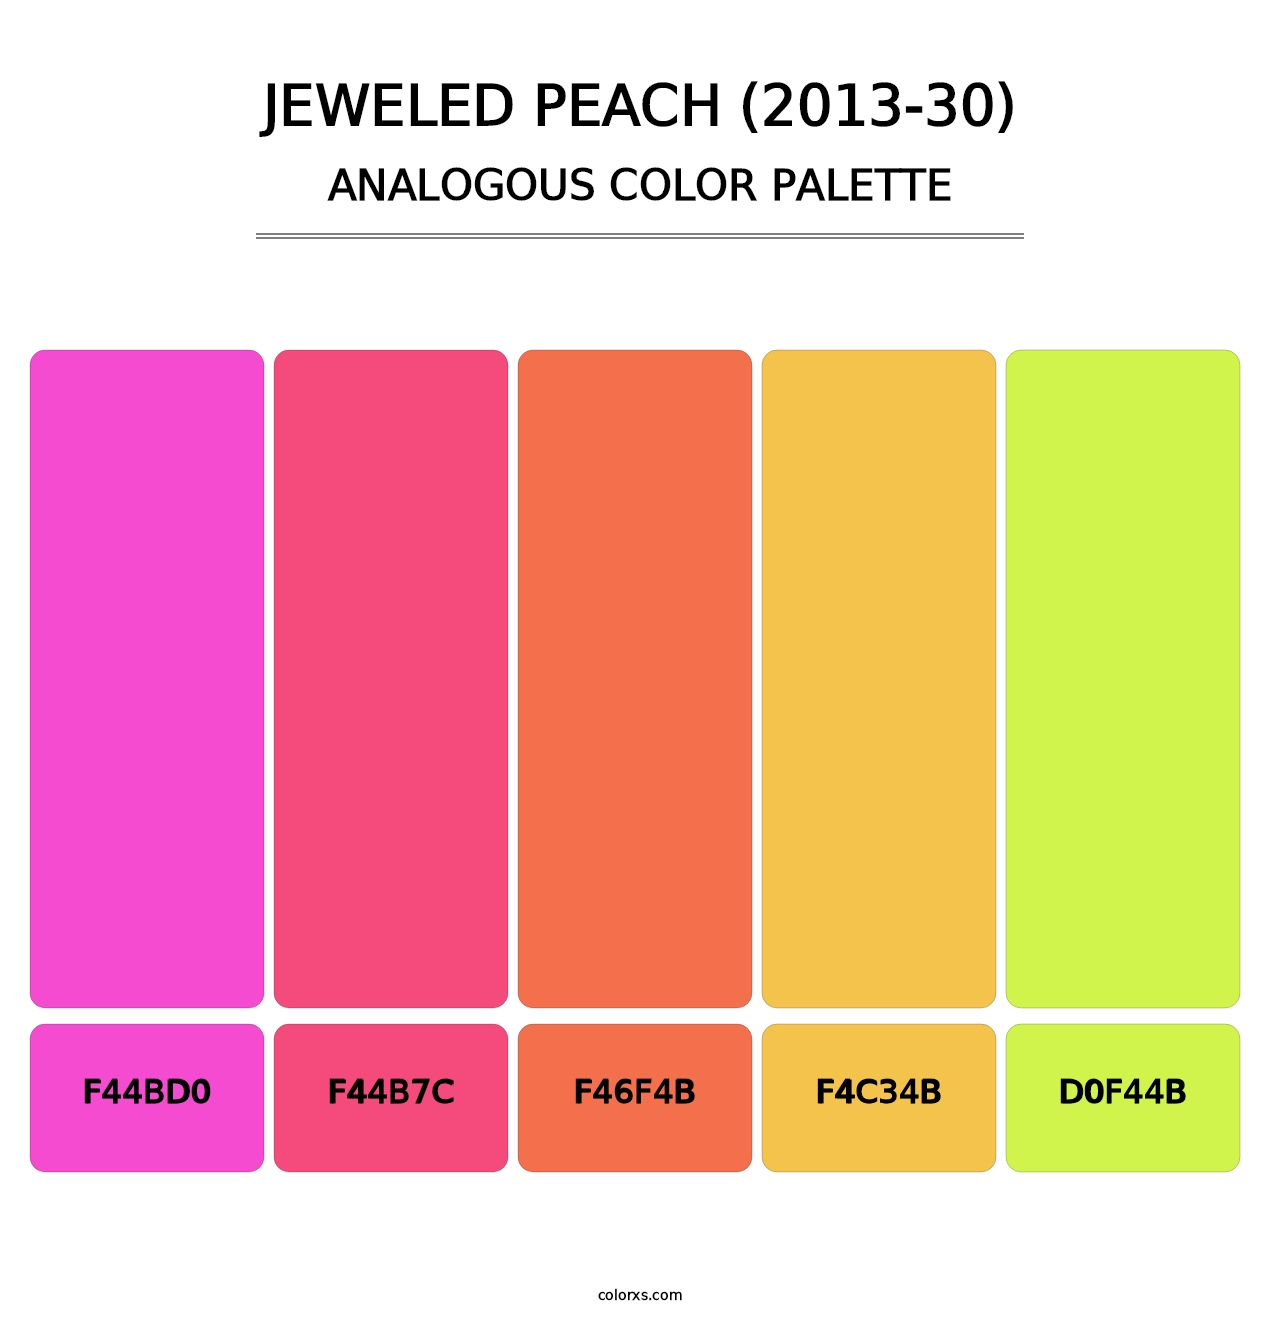 Jeweled Peach (2013-30) - Analogous Color Palette